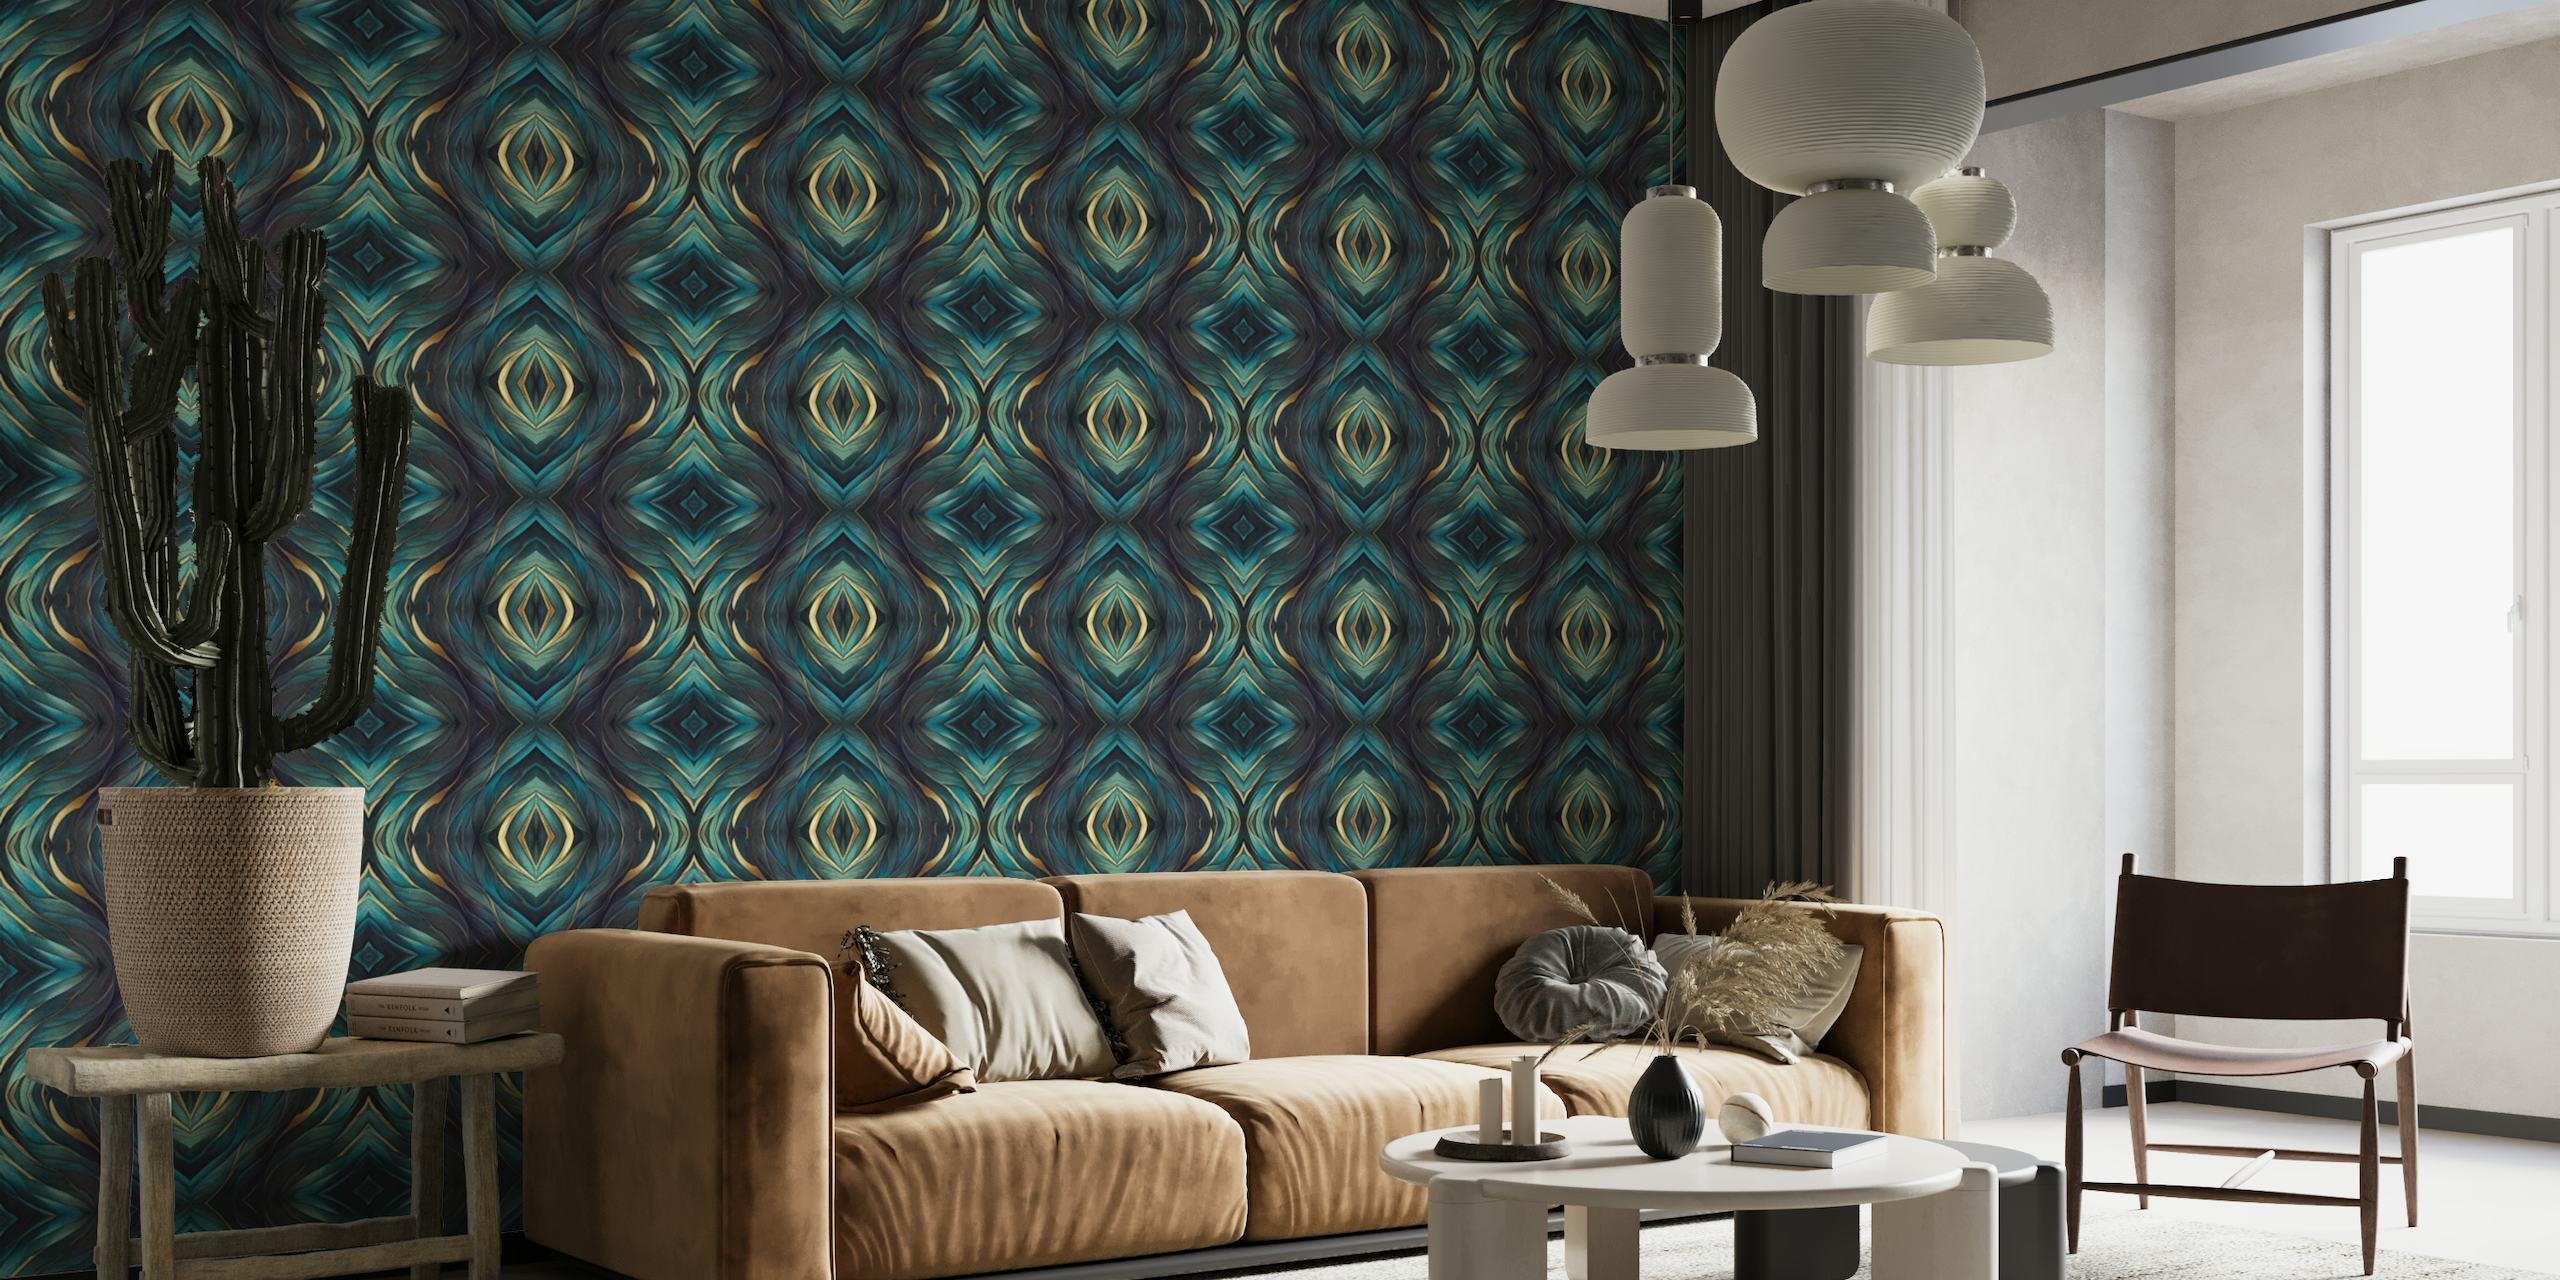 Artisanal Mediterranean Tile Design Teal Blue Gold tapetit